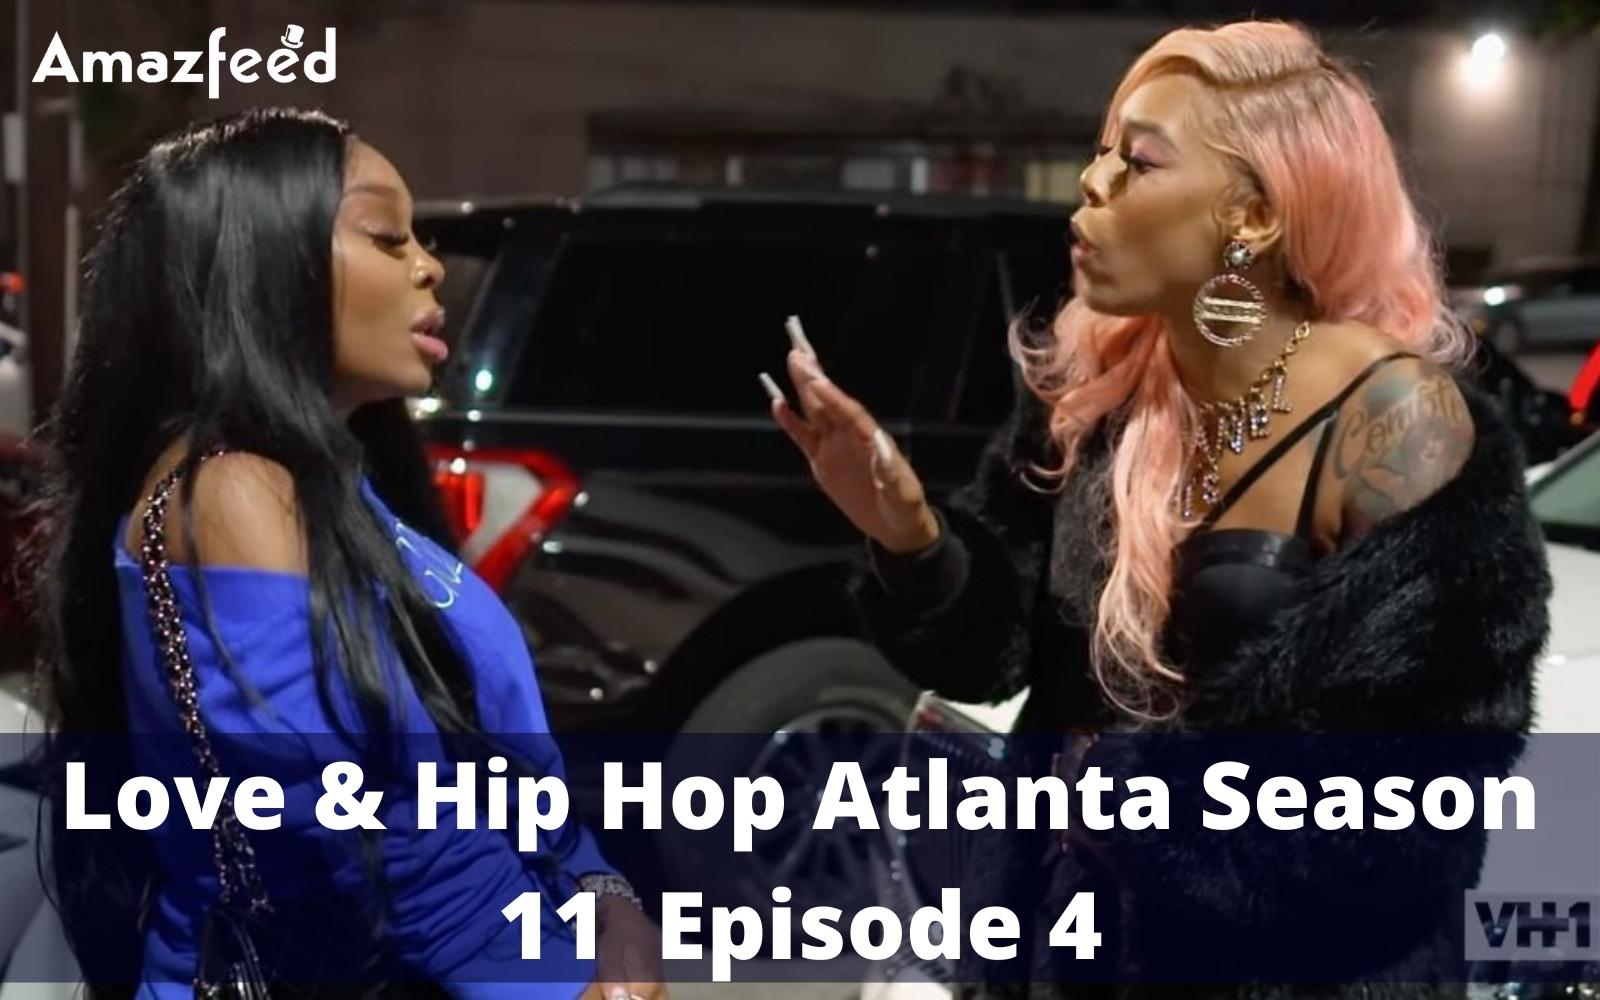 Love & Hip Hop Atlanta Season 11 Episode 4 : Countdown, Release Date, Recap, Spoiler, Teaser